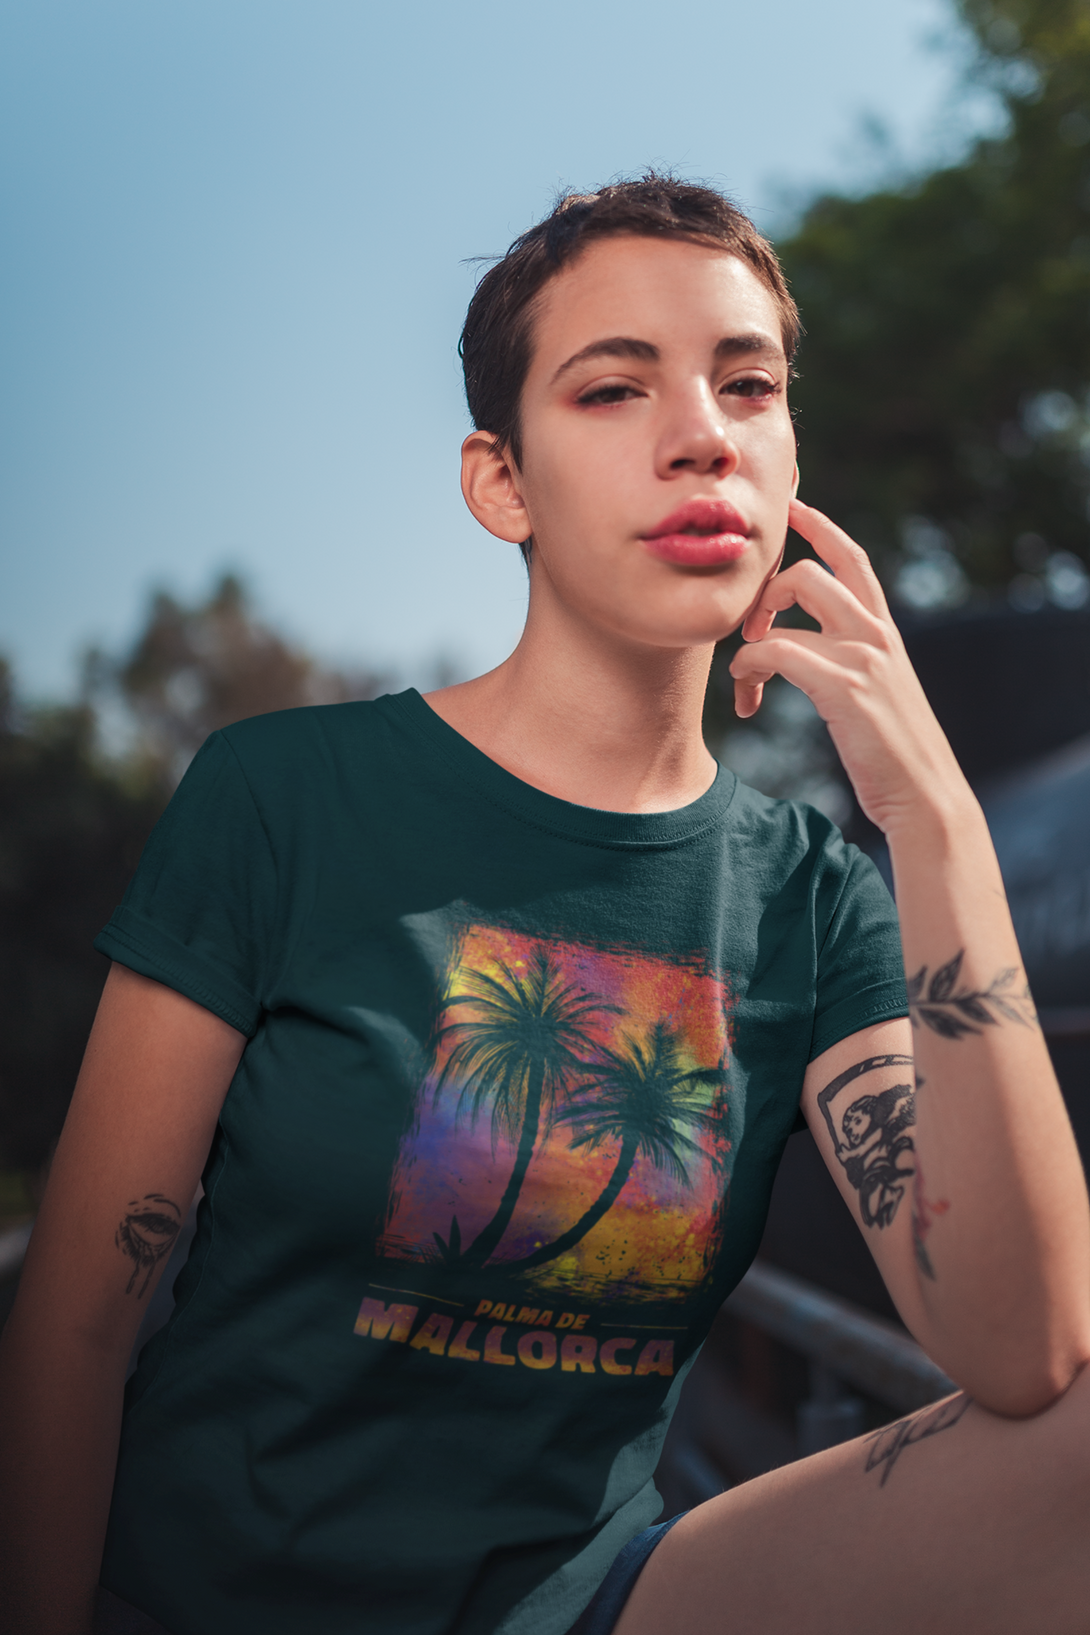 Palma De Mallorca Printed T-Shirt For Women - WowWaves - 3